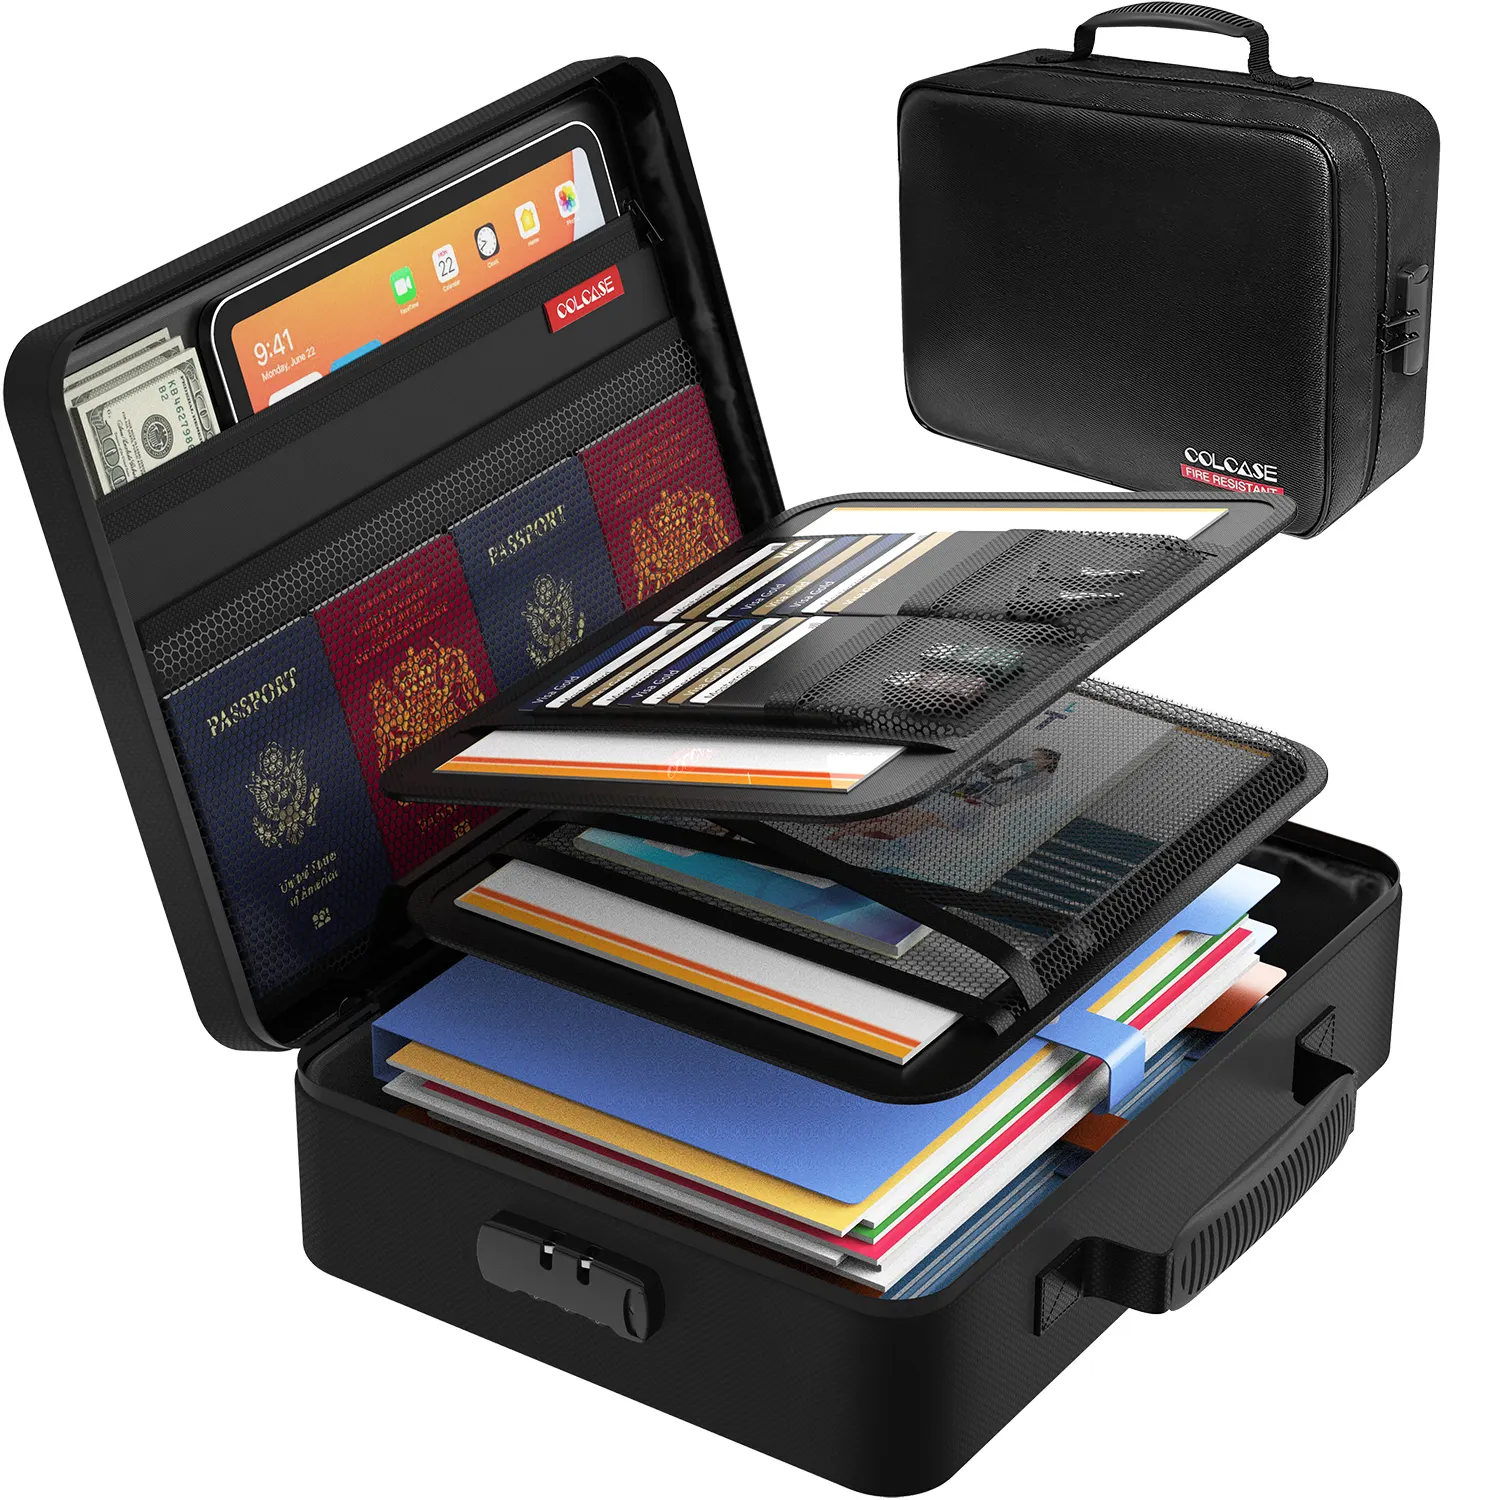 लॉक ऑर्गनाइज़र बॉक्स पासपोर्ट एक्सेसरी बैग फायरप्रूफ केस फायरप्रूफ दस्तावेज़ बॉक्स के साथ उच्च गुणवत्ता वाला फायरप्रूफ बैग